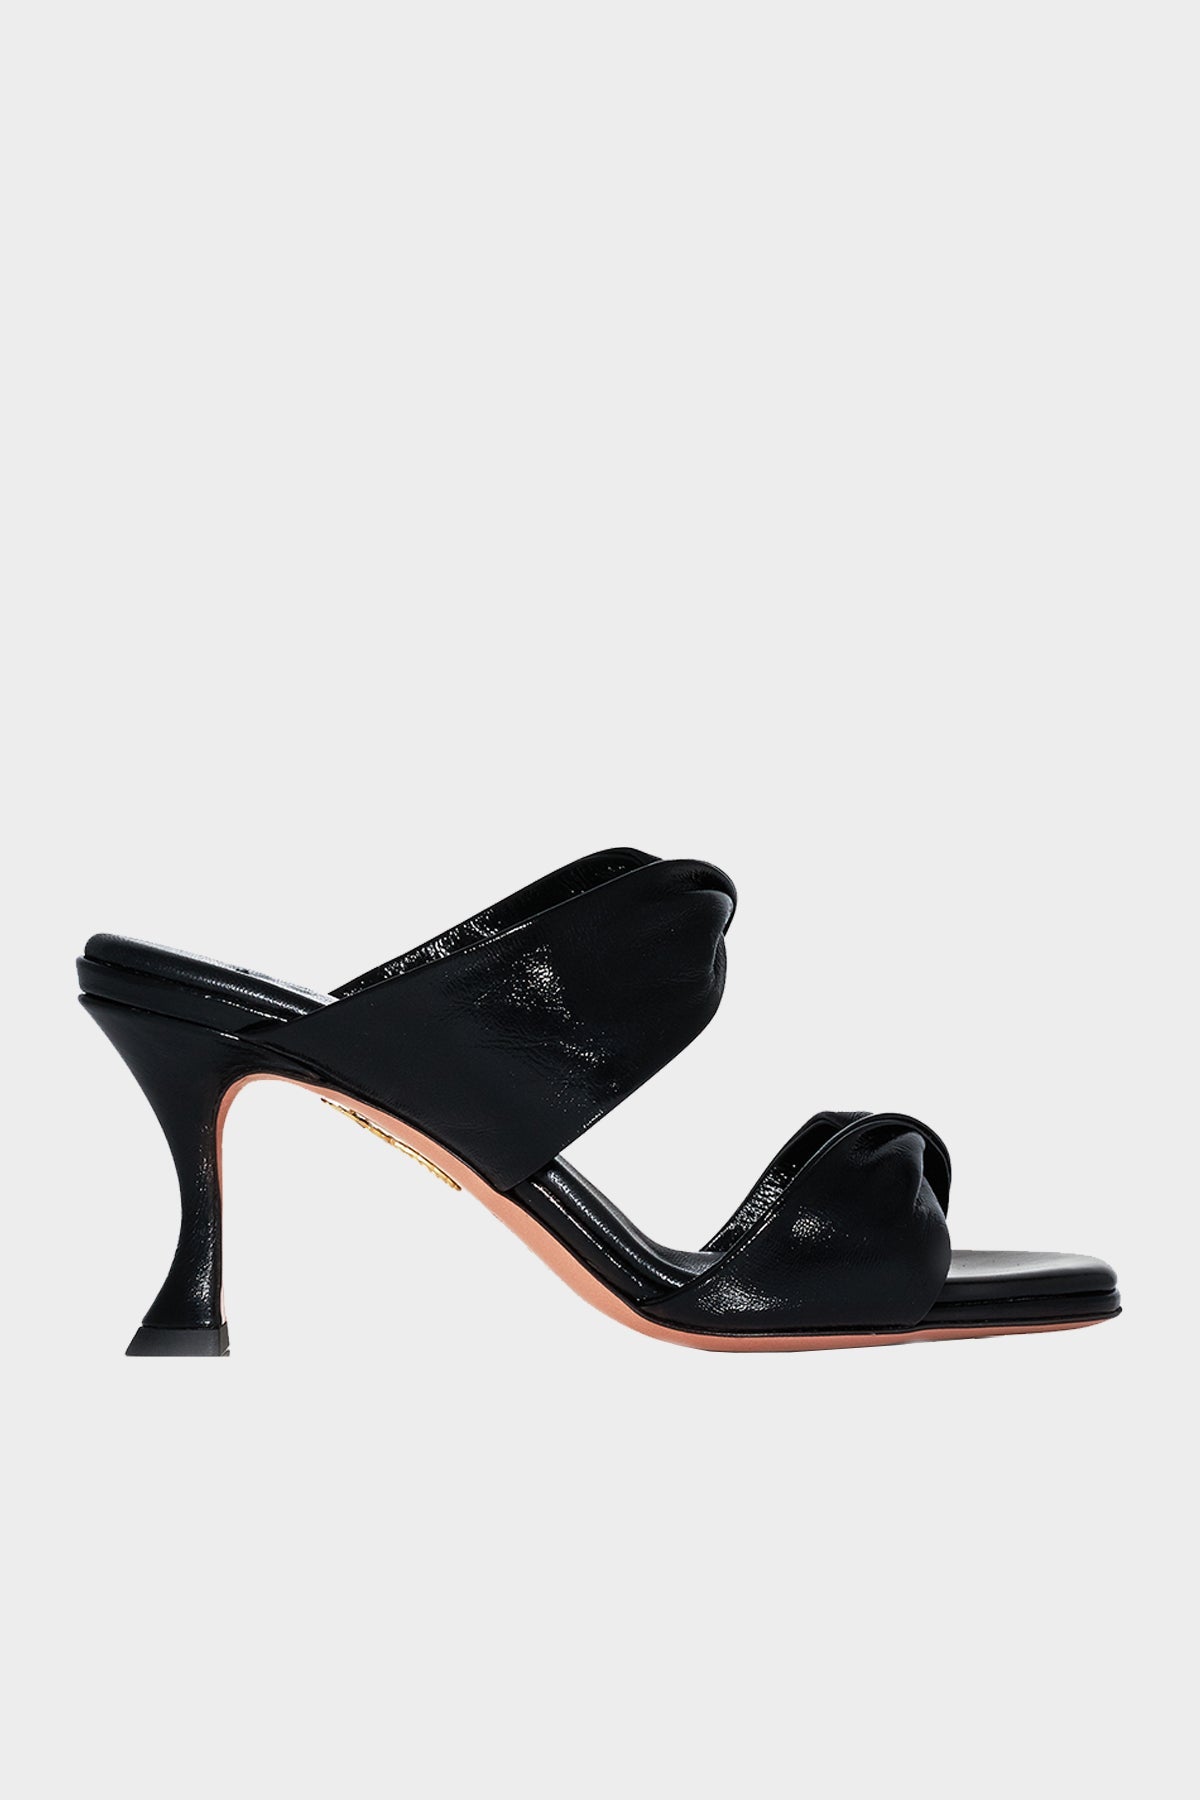 Twist Gloss Leather Sandal 75 in Black - shop-olivia.com